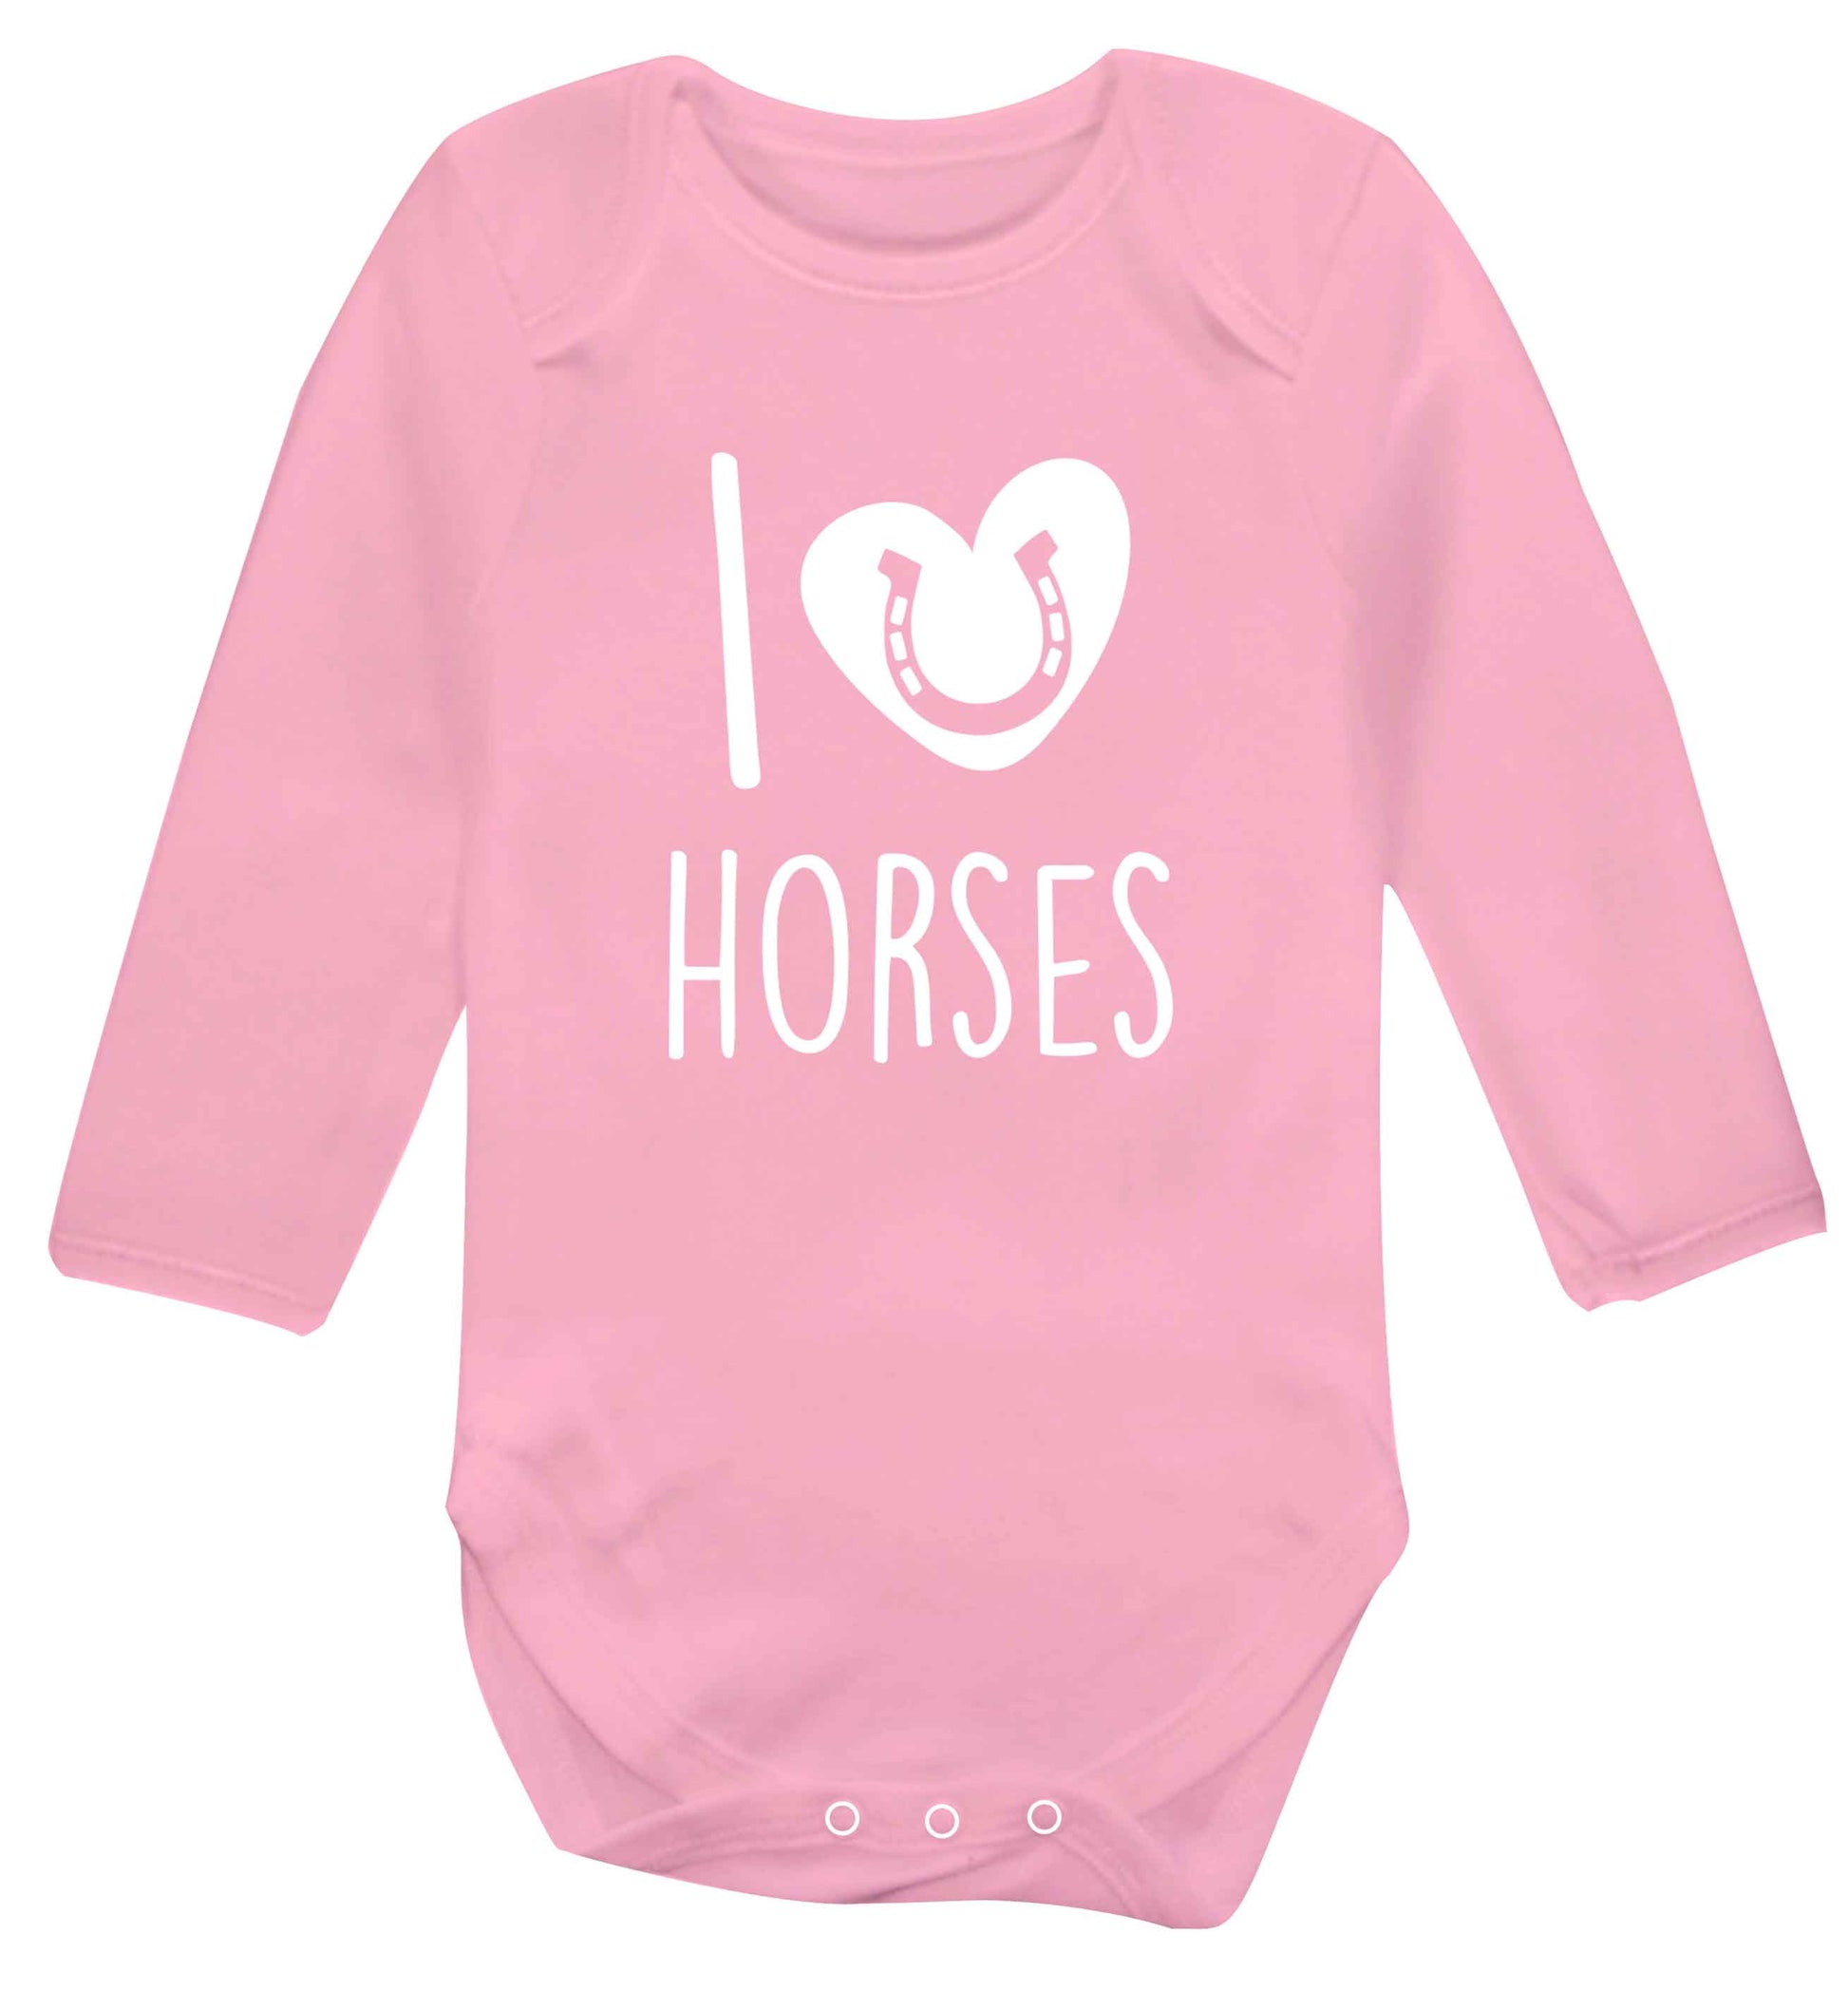 I love horses baby vest long sleeved pale pink 6-12 months